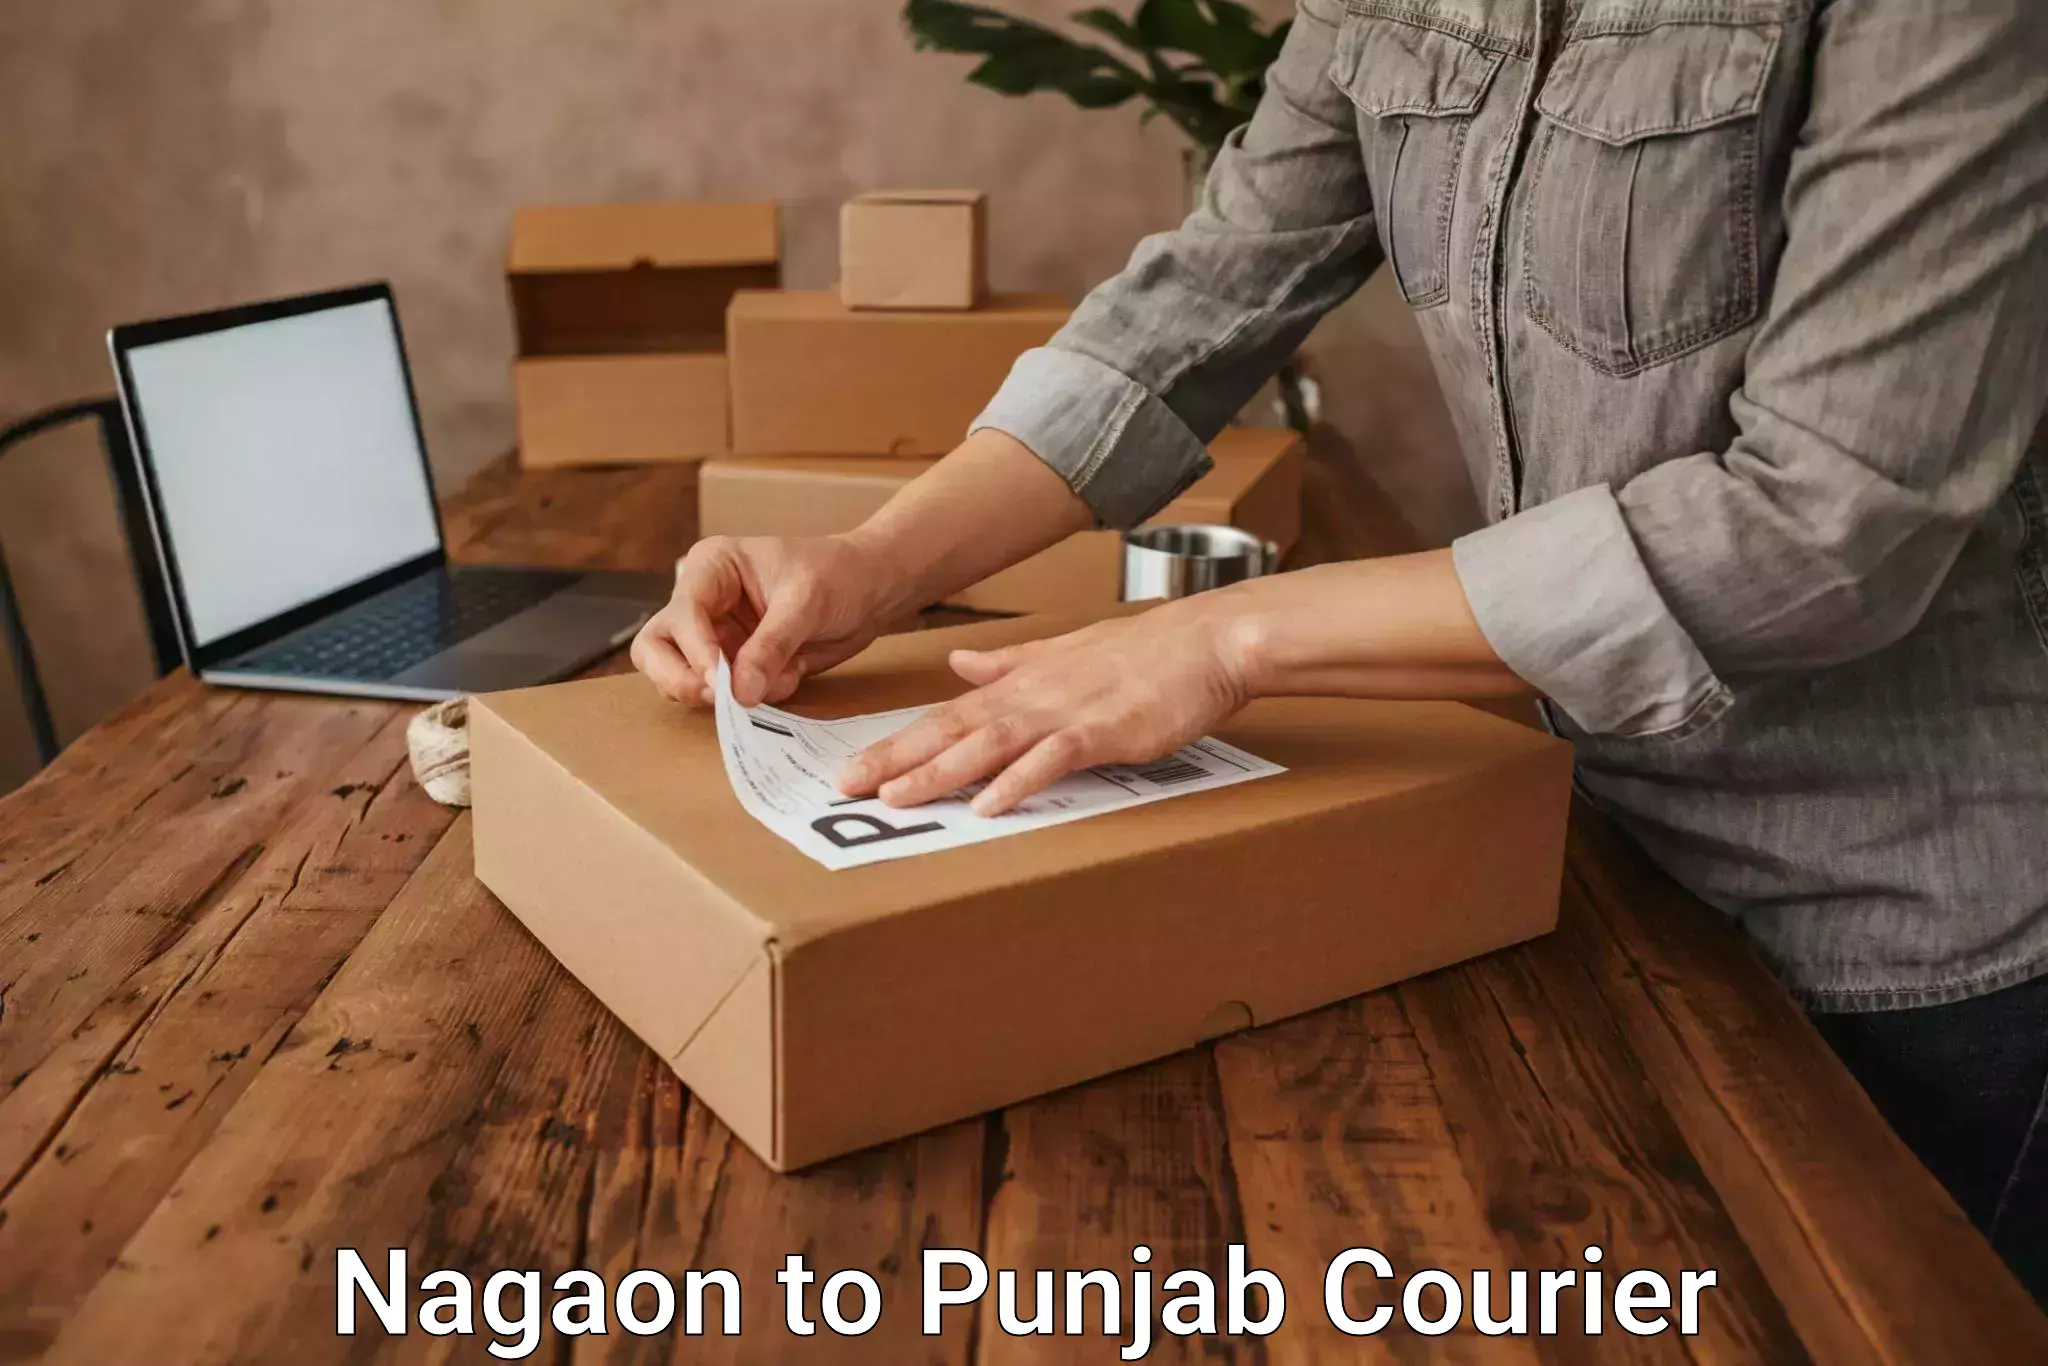 International parcel service Nagaon to Punjab